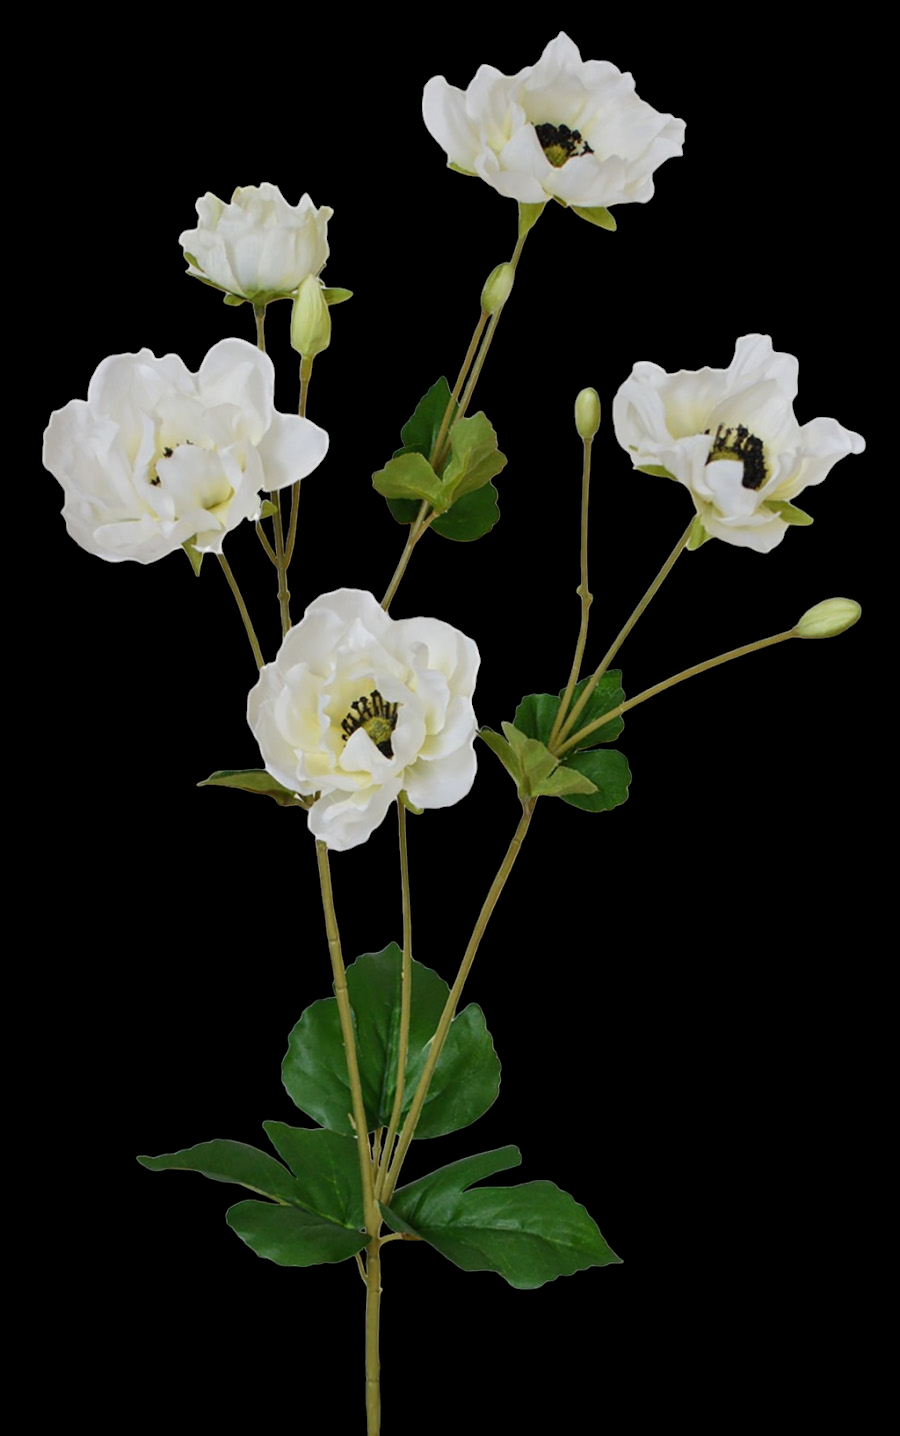 Cream/White Butterfly Ranunculus x 5 
27"